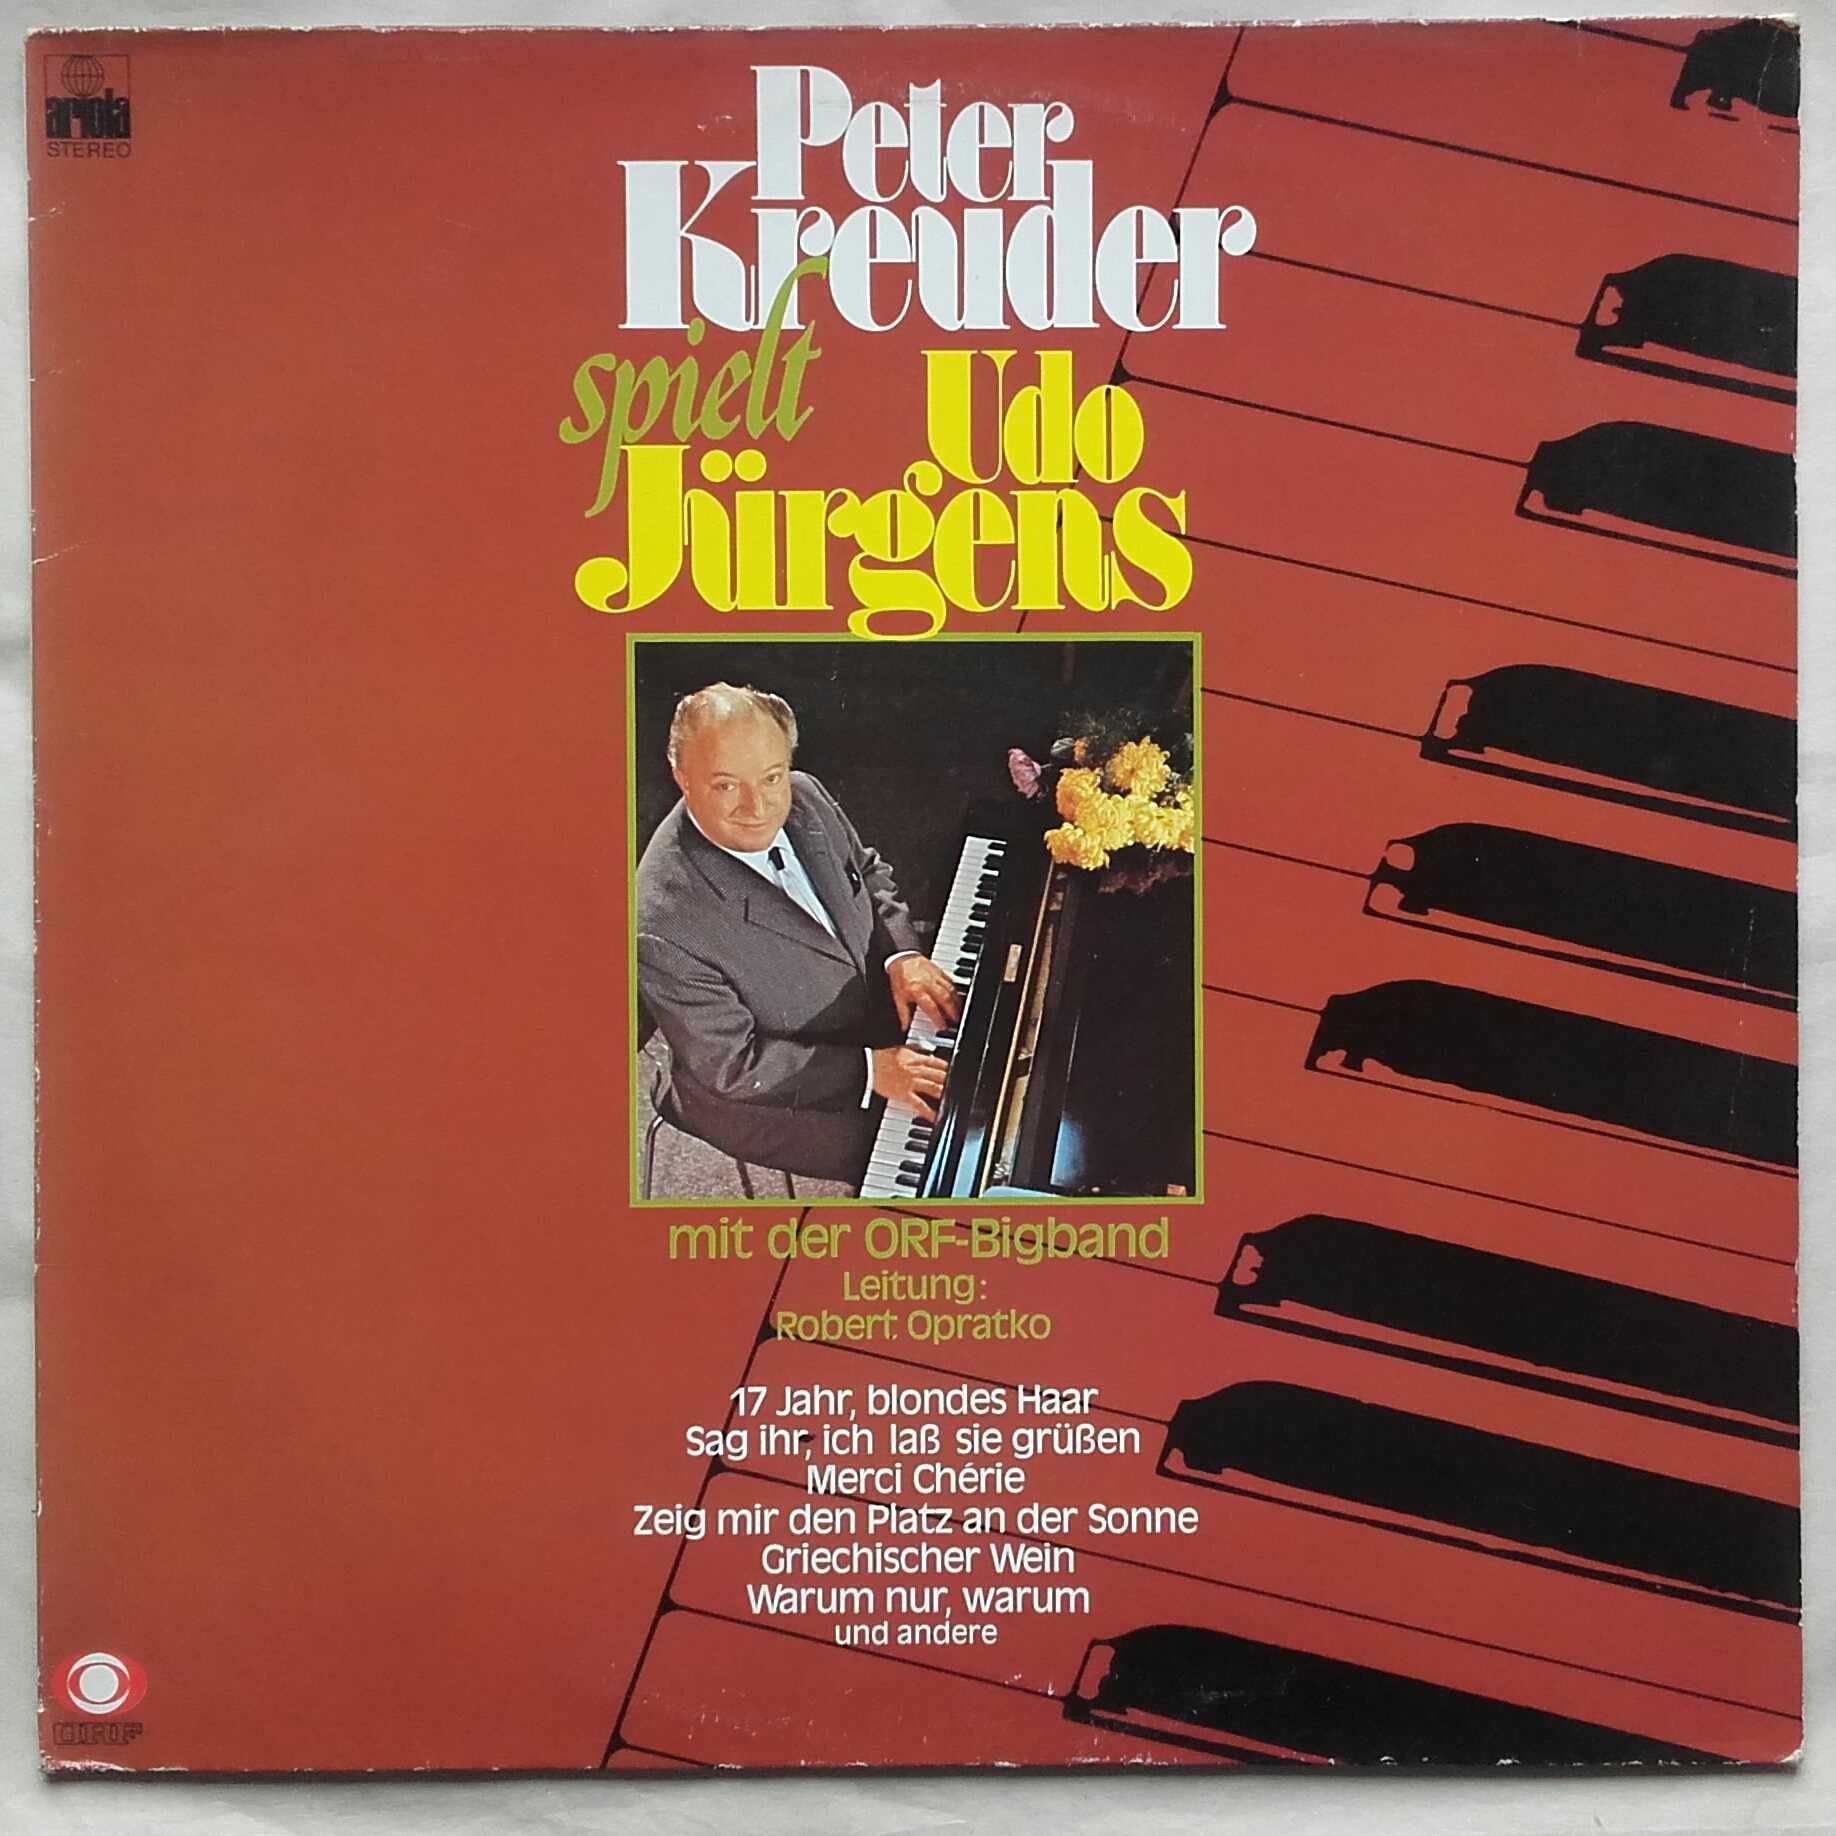 Peter Kreuder spielt Udo Jungers, winyl 1977 r.